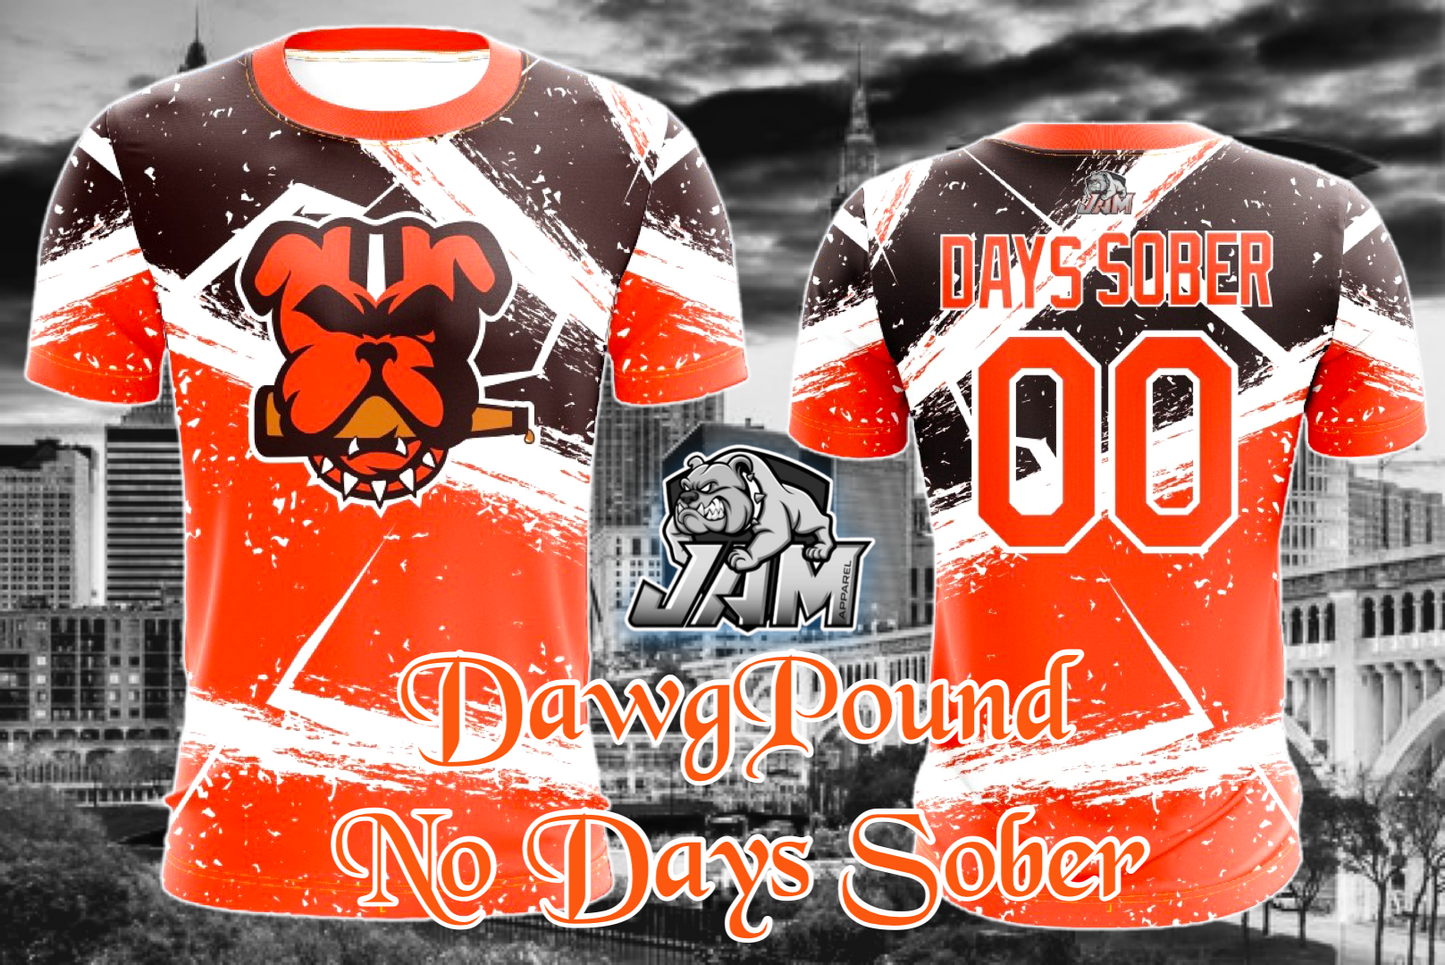 No Days Sober - Dawg Pound Jersey